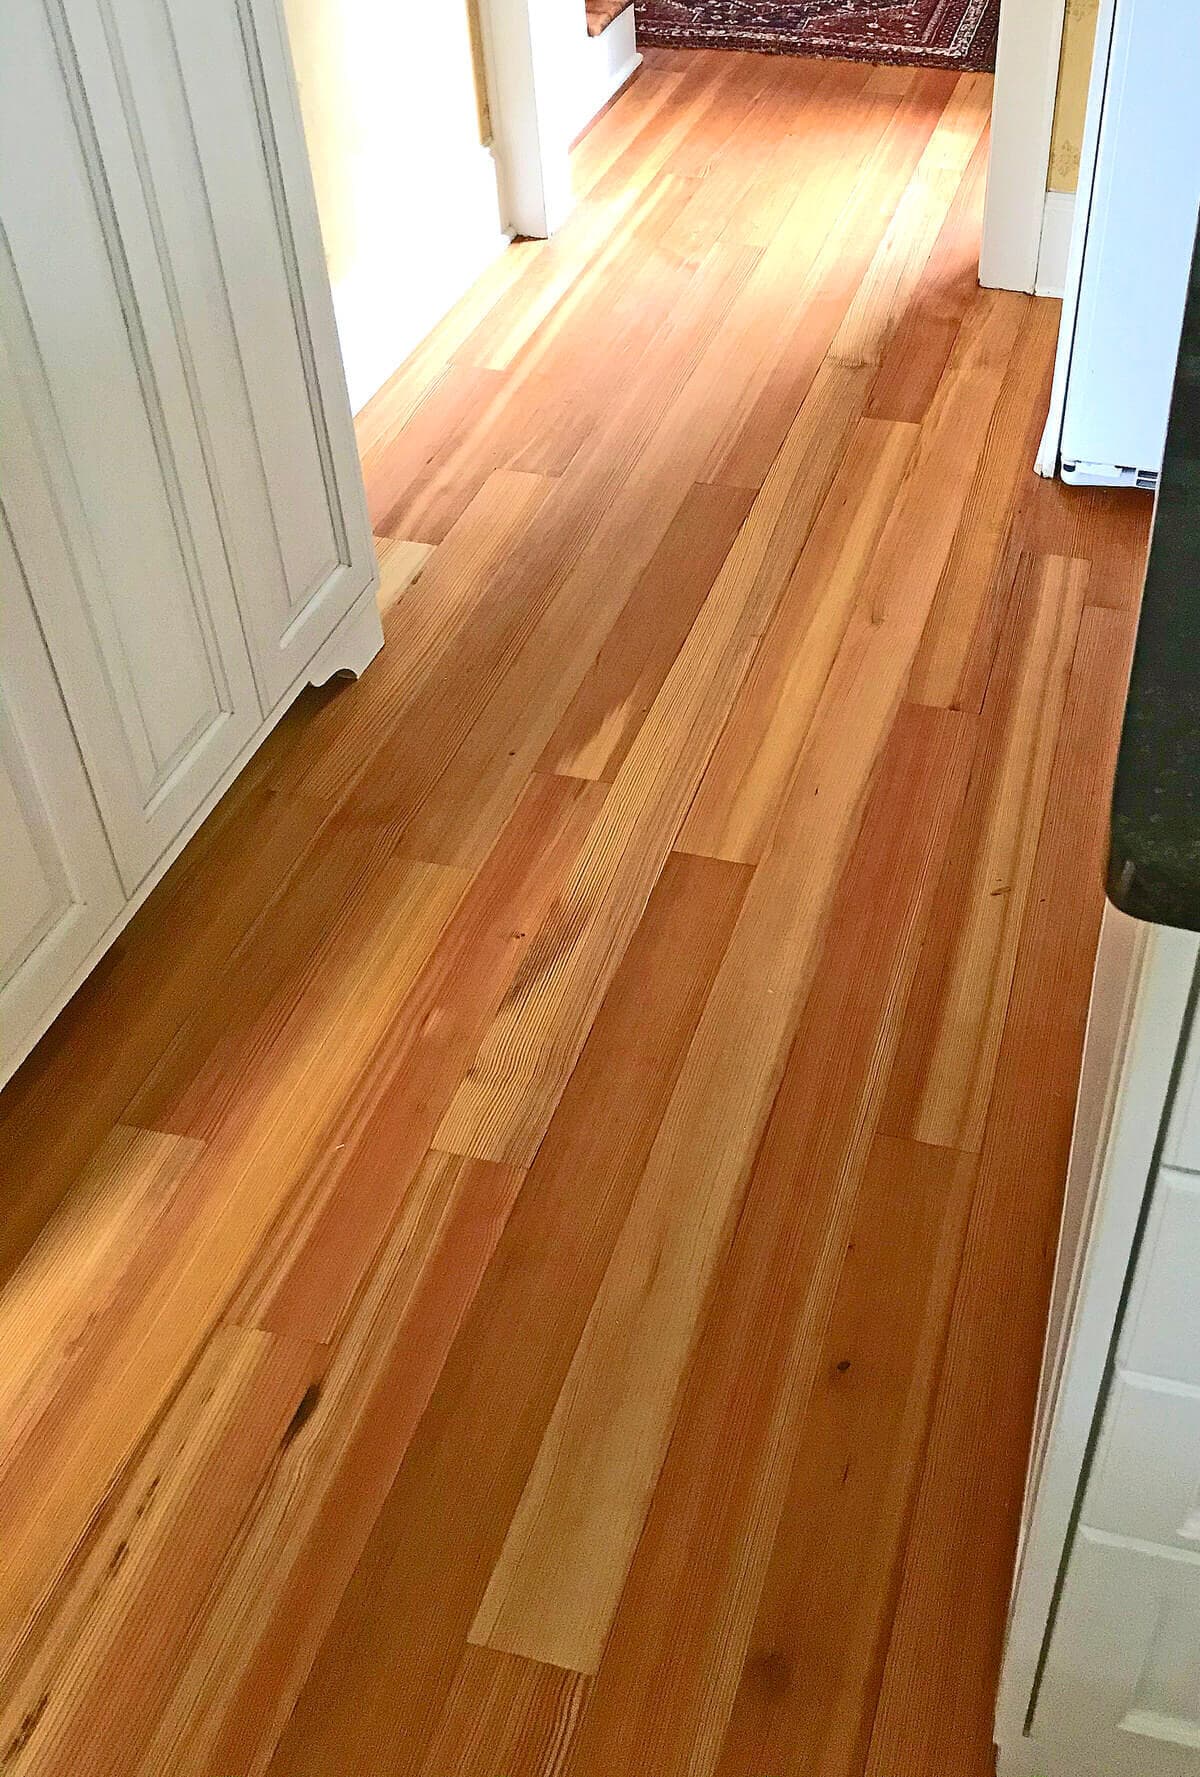 vertical grain heart pine floor with combining heartwood and sapwood